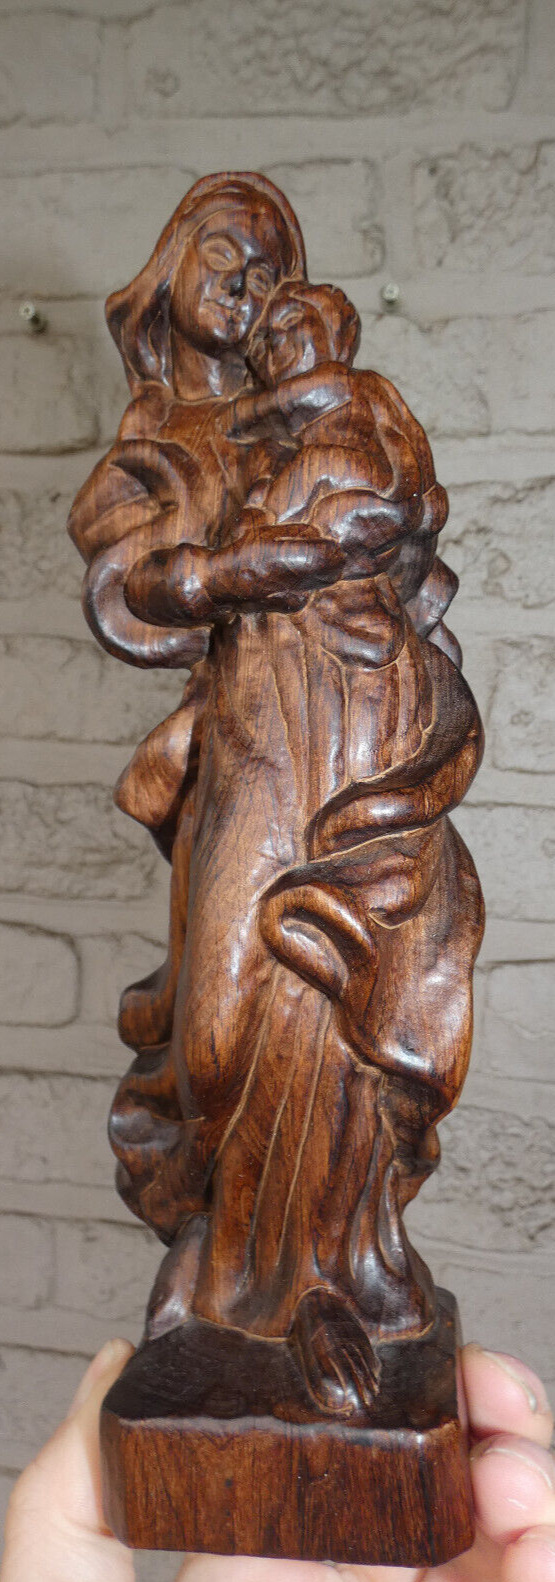 Vintage wood carved madonna child statue figurine 1970s